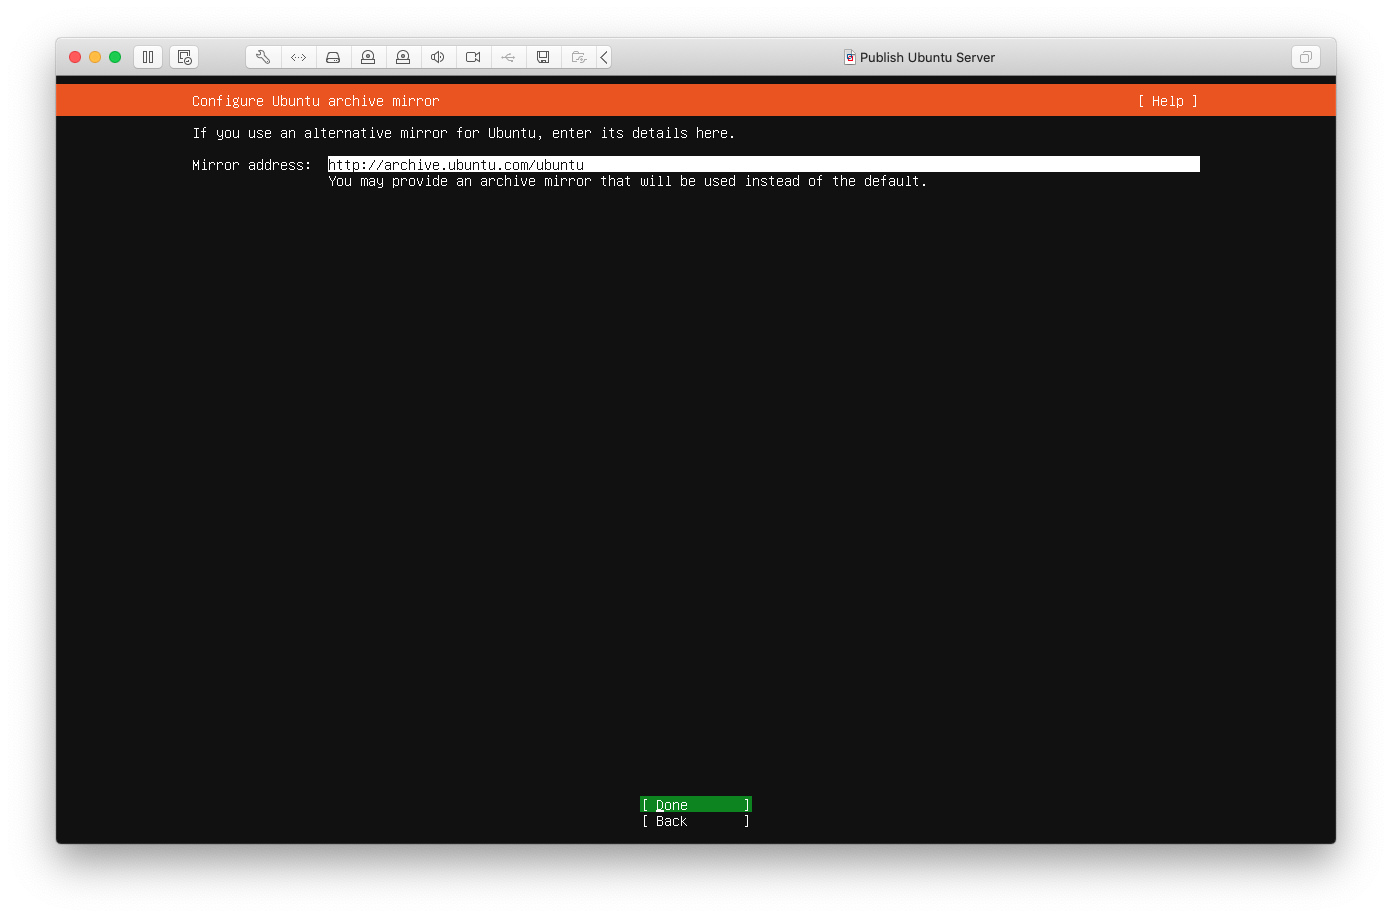 Configure Ubuntu Archive Mirror